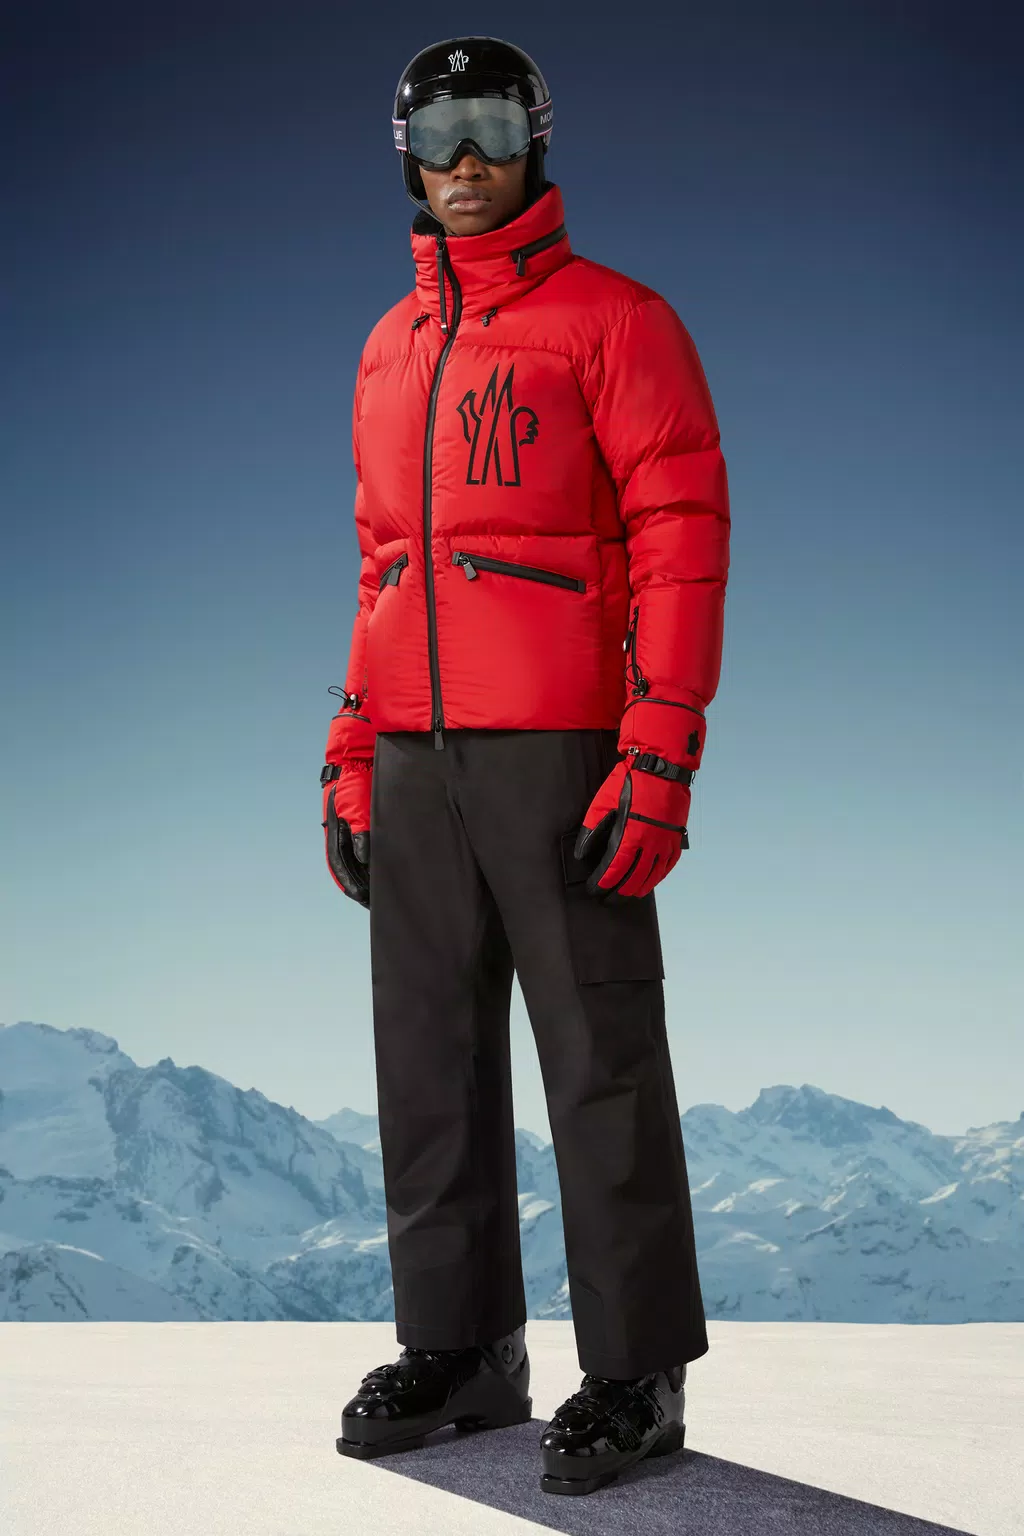 Ski Pants for Men - Grenoble